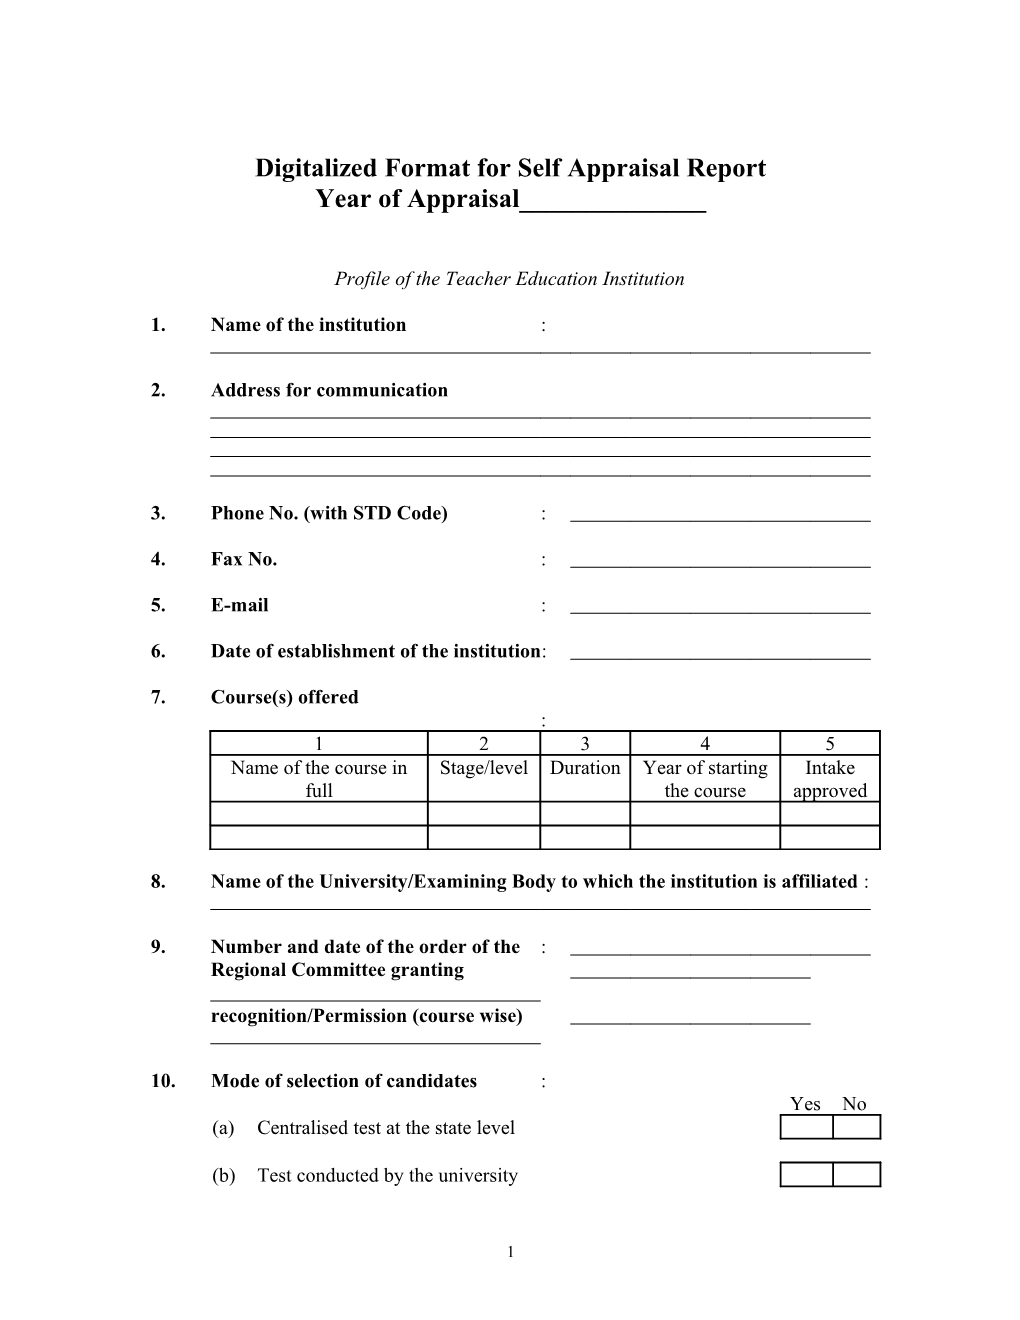 Digitalized Format for Self Appraisal Report